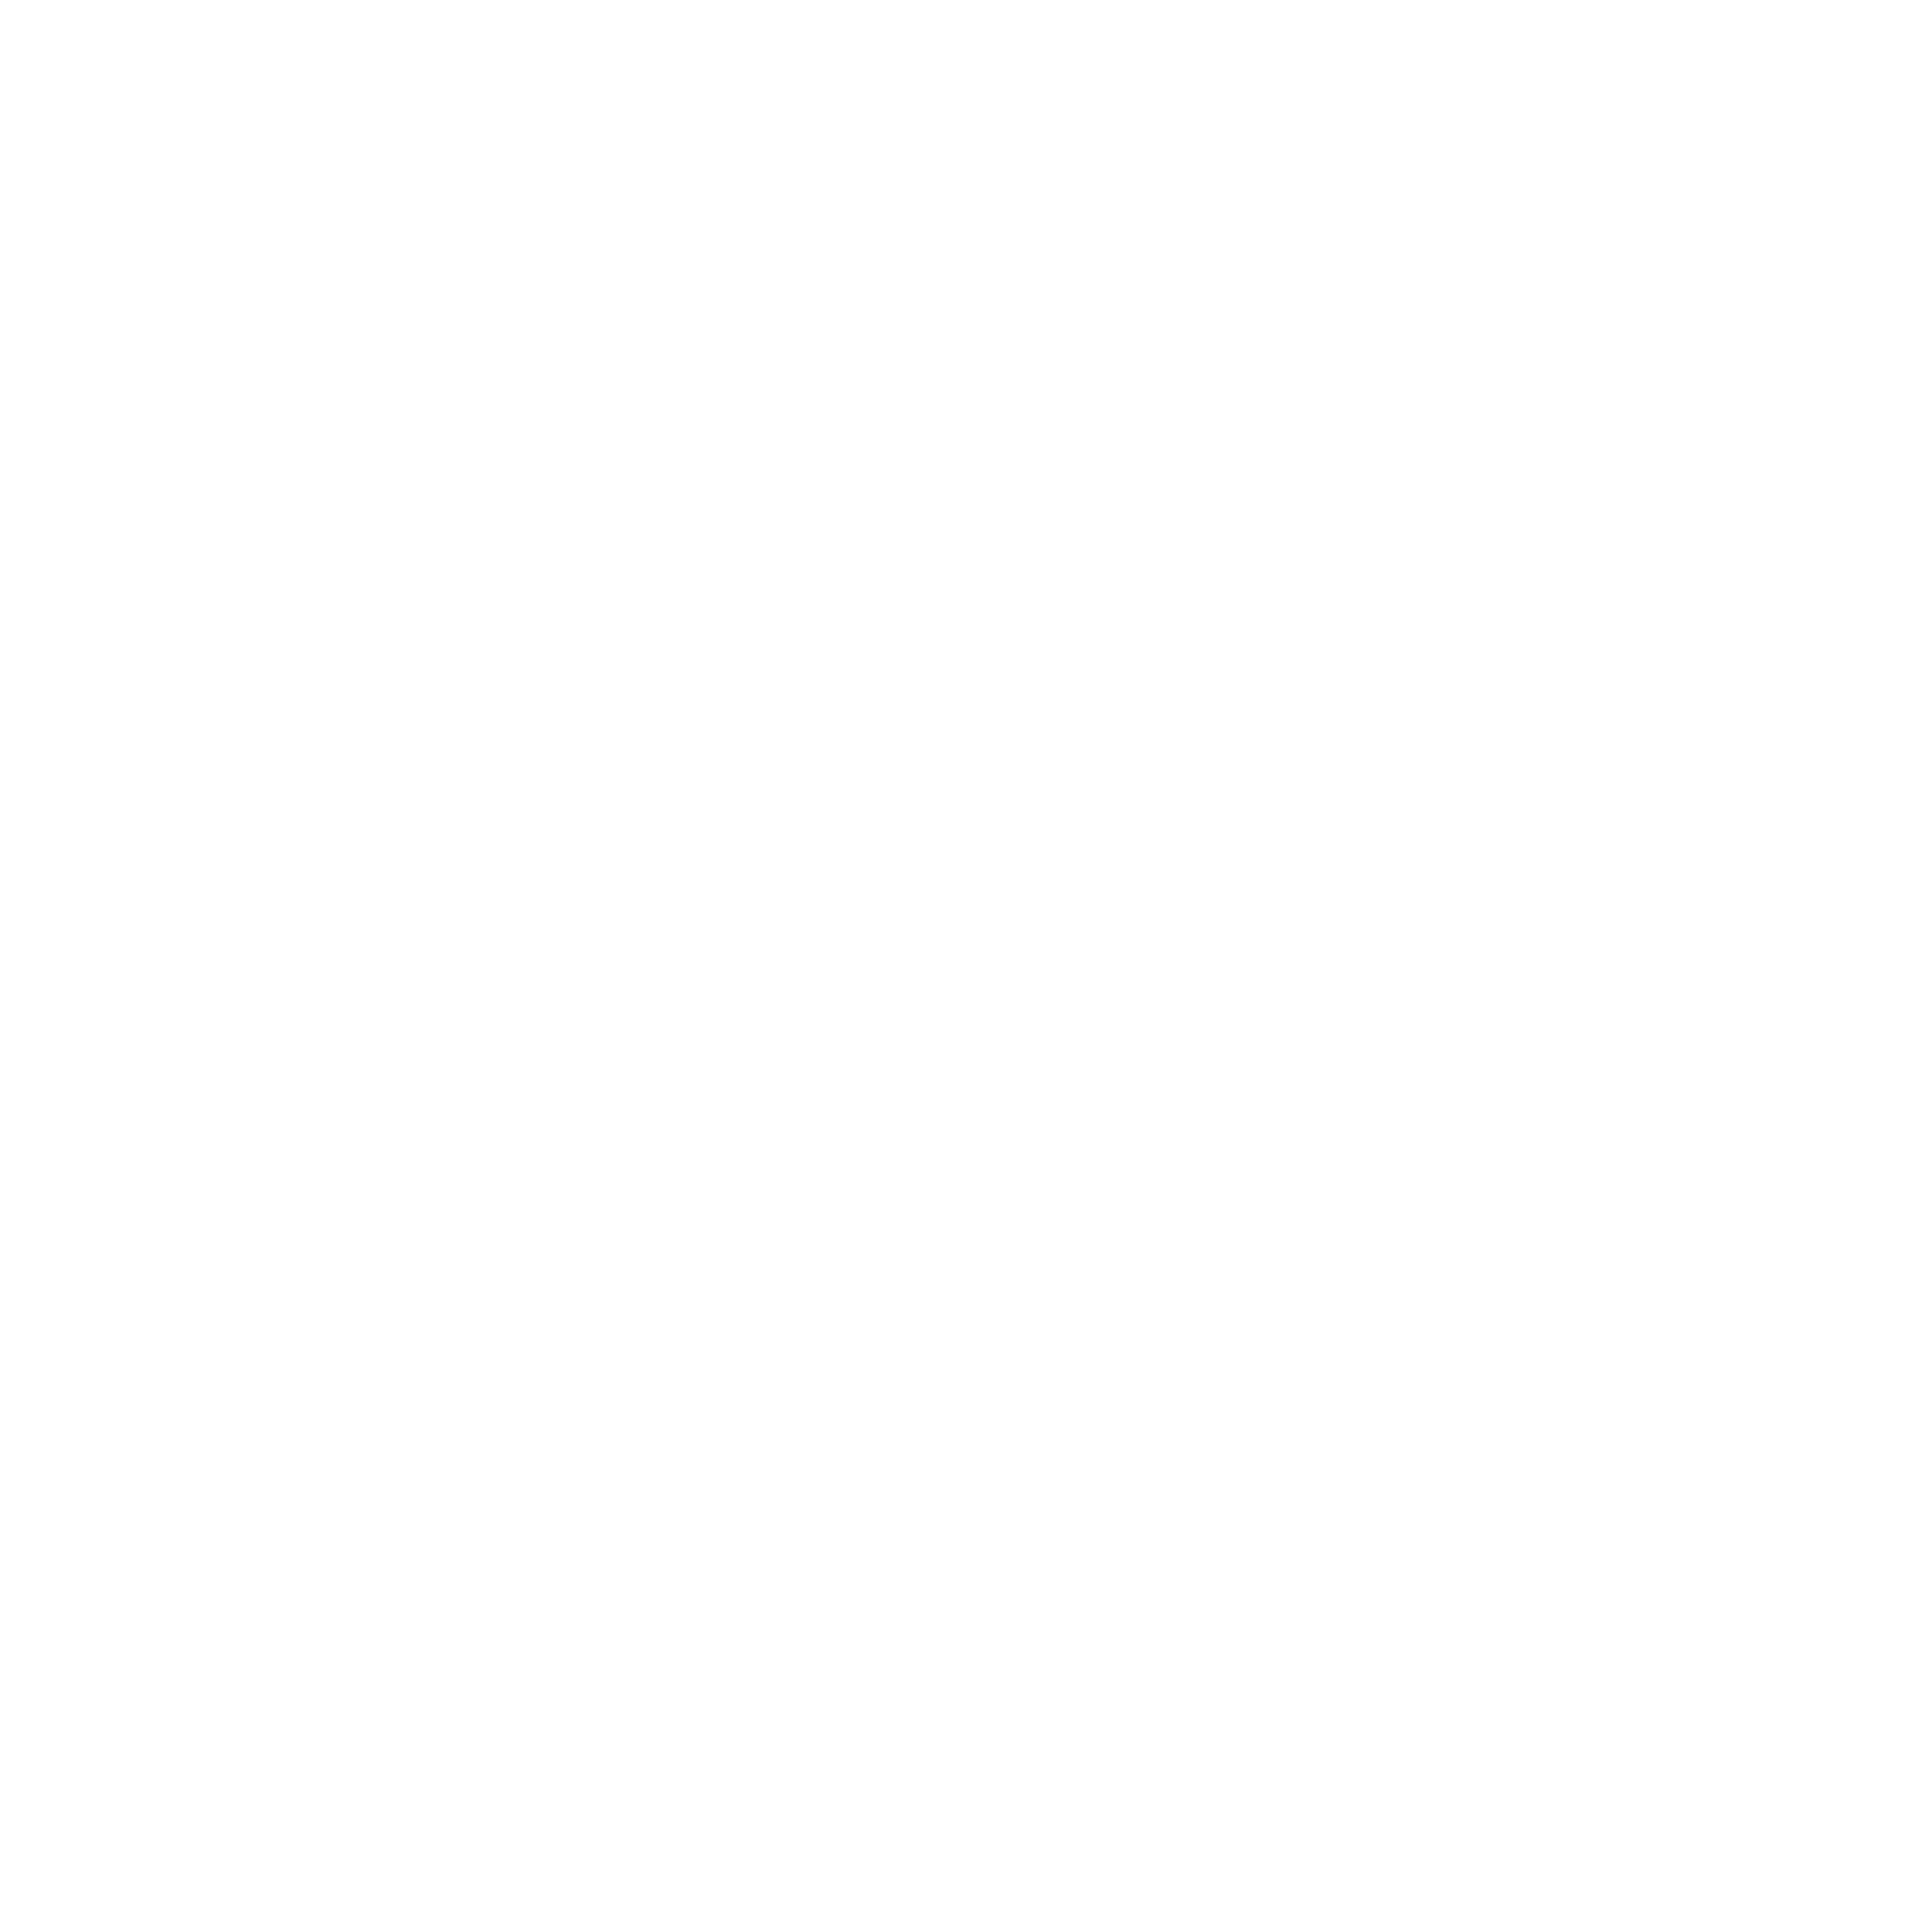 Buy Mercedes Benz Logo Online In India - Etsy India